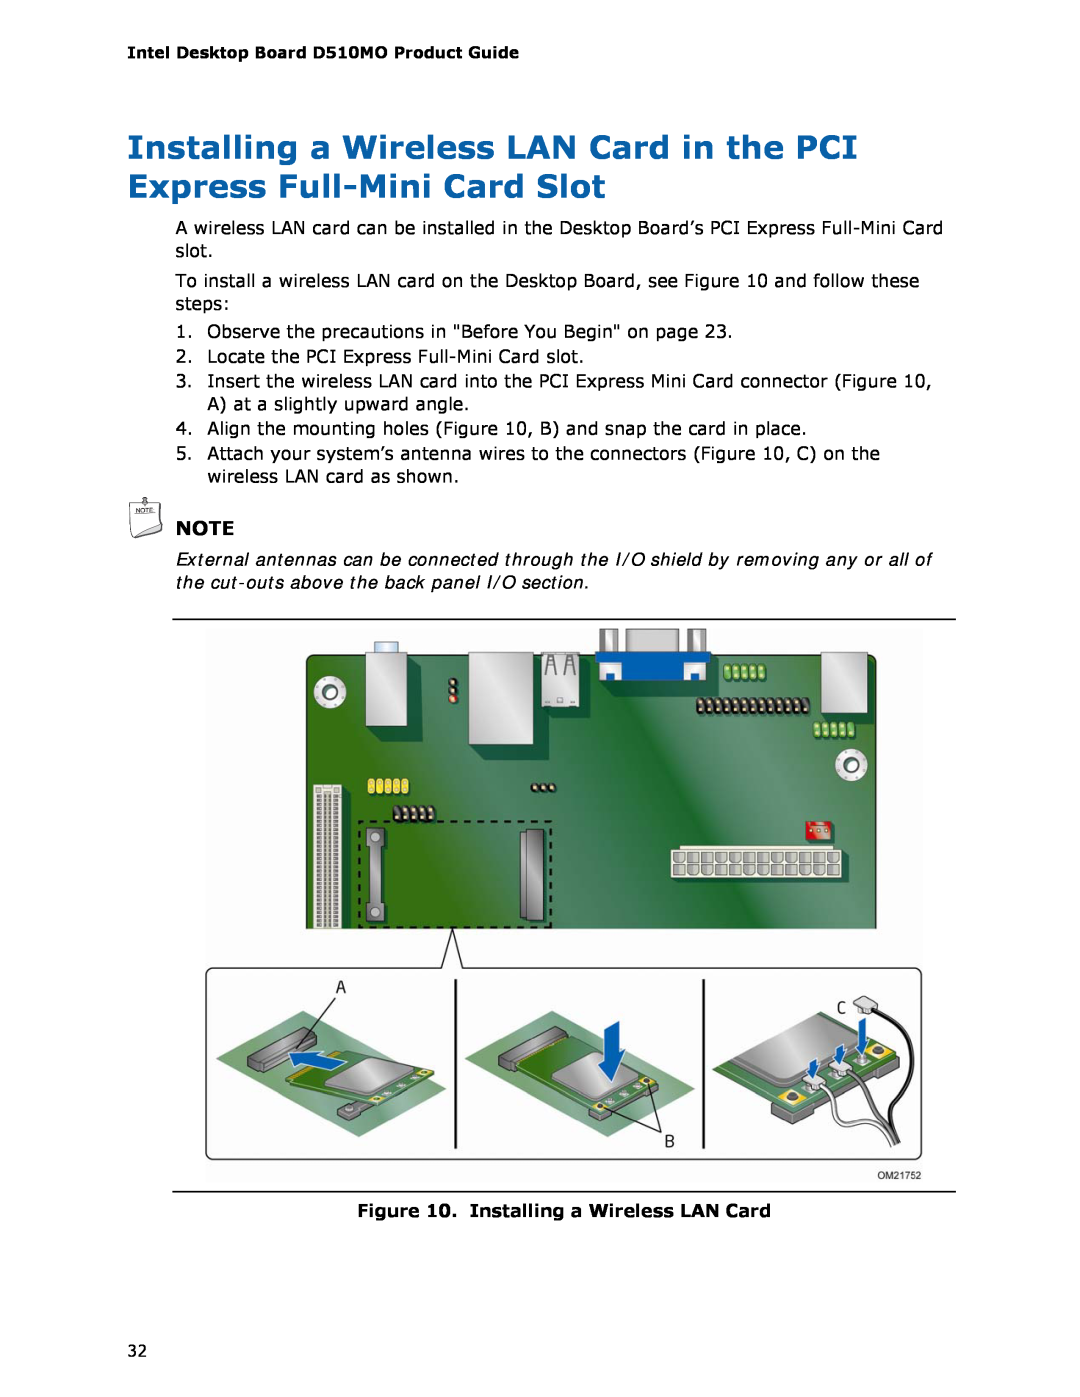 Intel D510MO manual Installing a Wireless LAN Card in the PCI Express Full-Mini Card Slot 